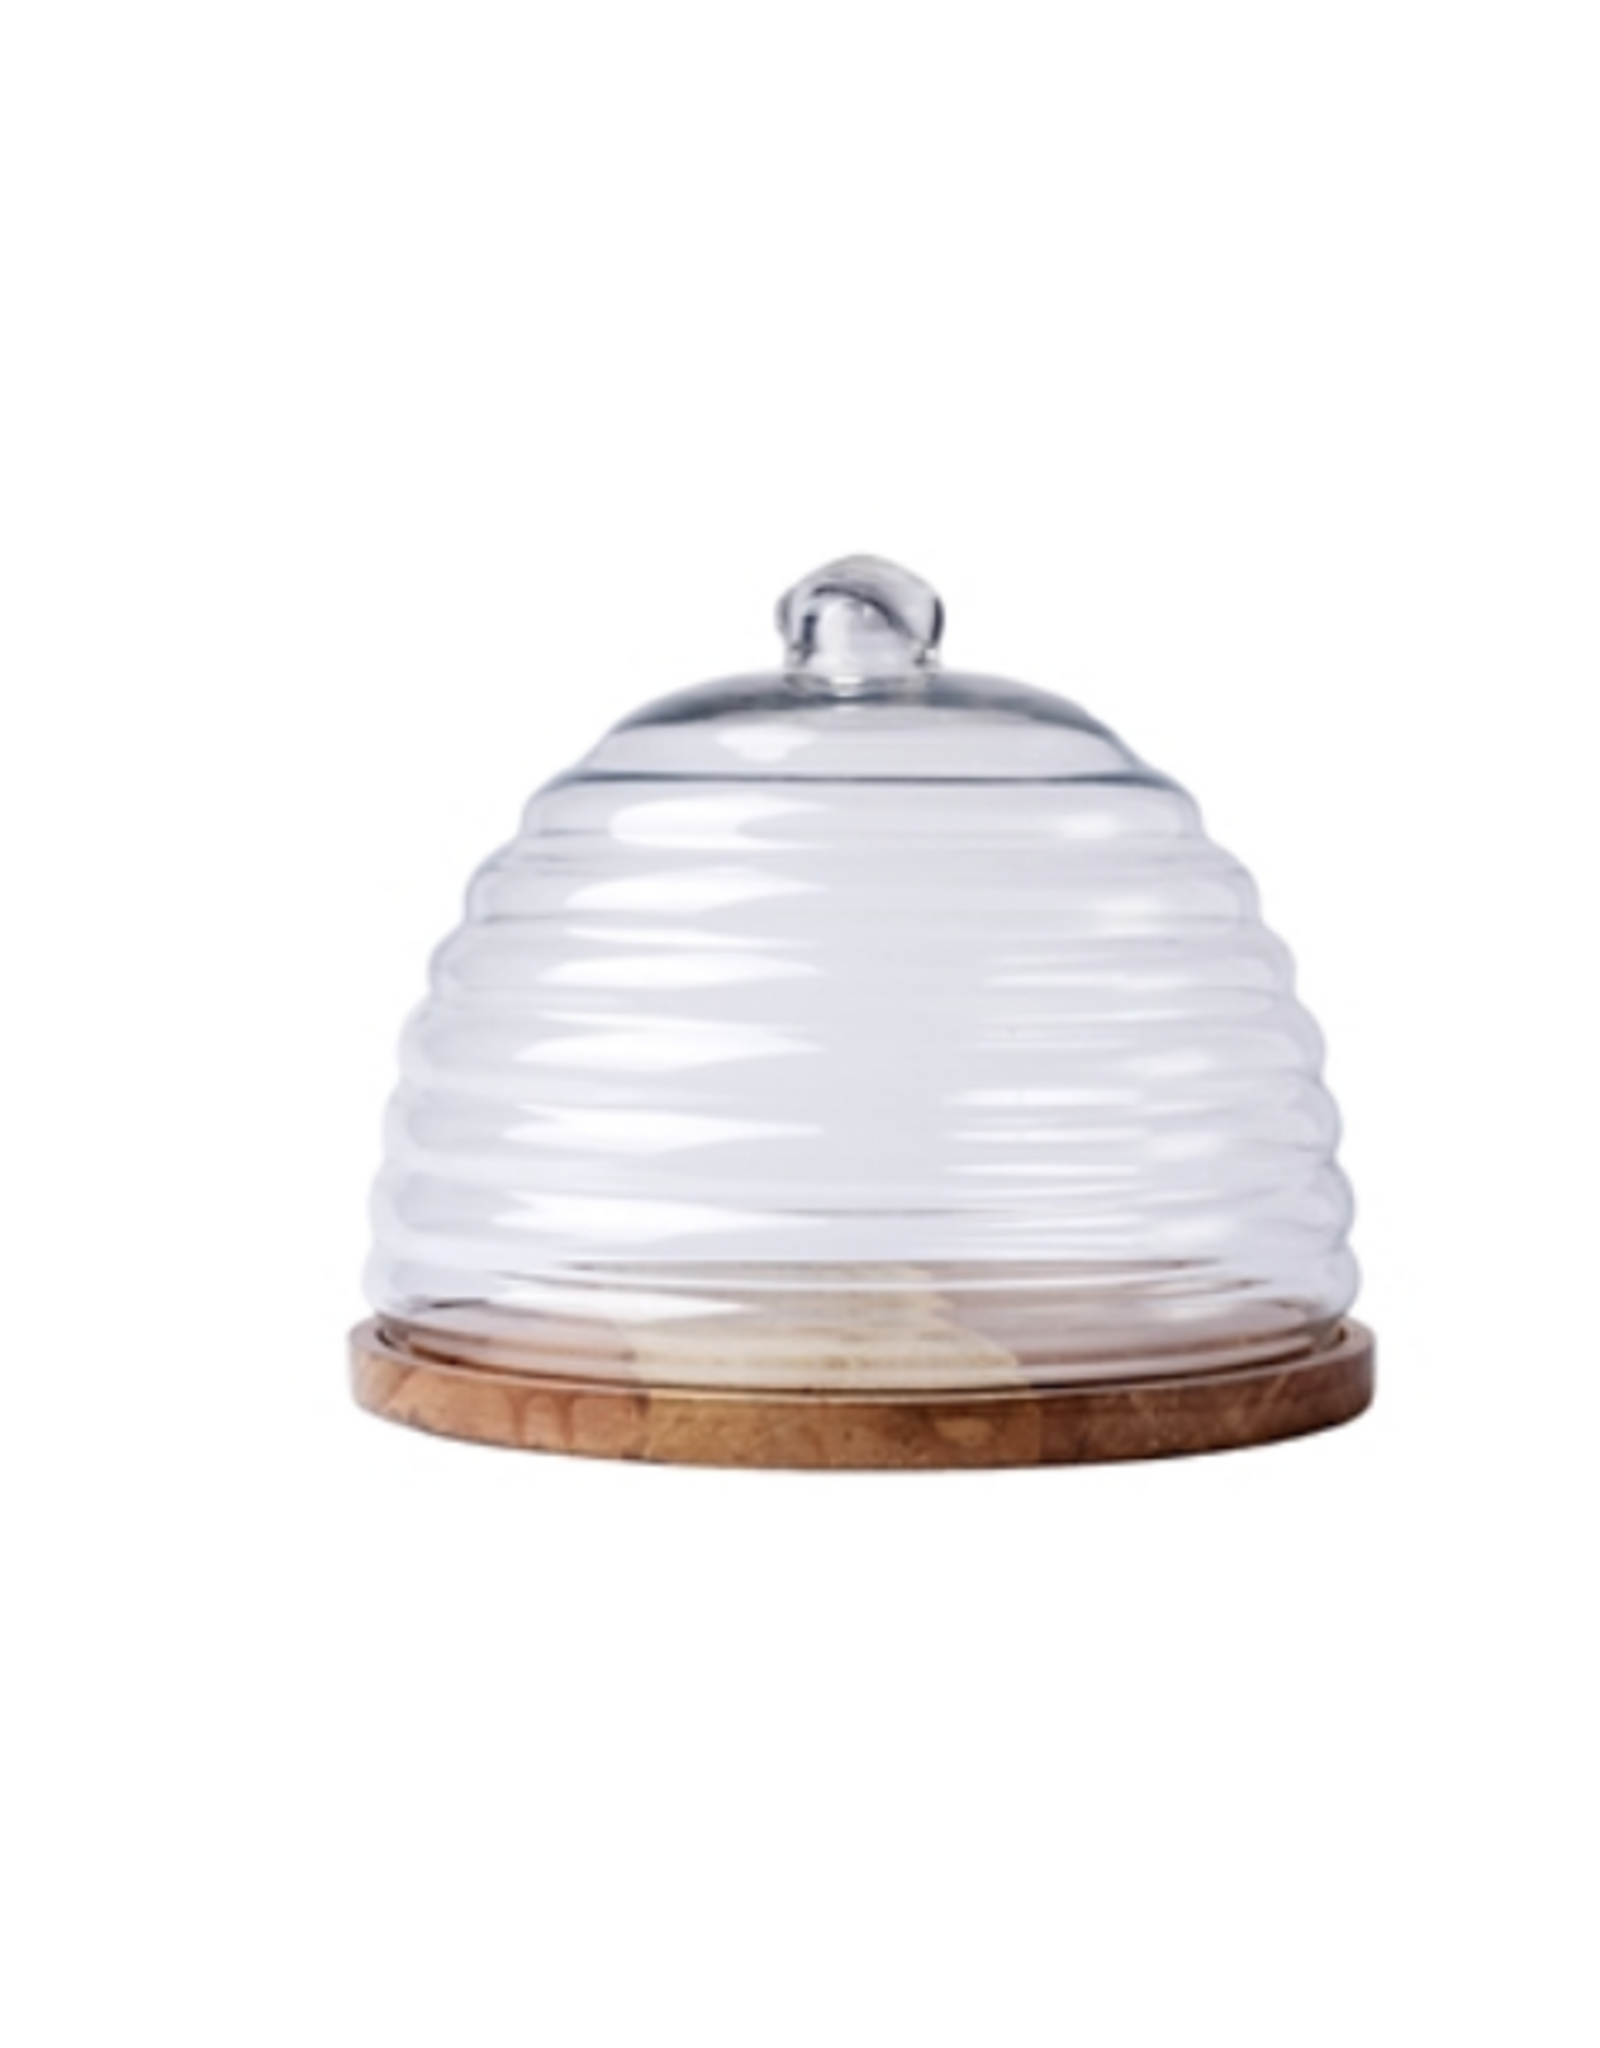 BIDK Mango Wood and Glass Round Hive Food Dome